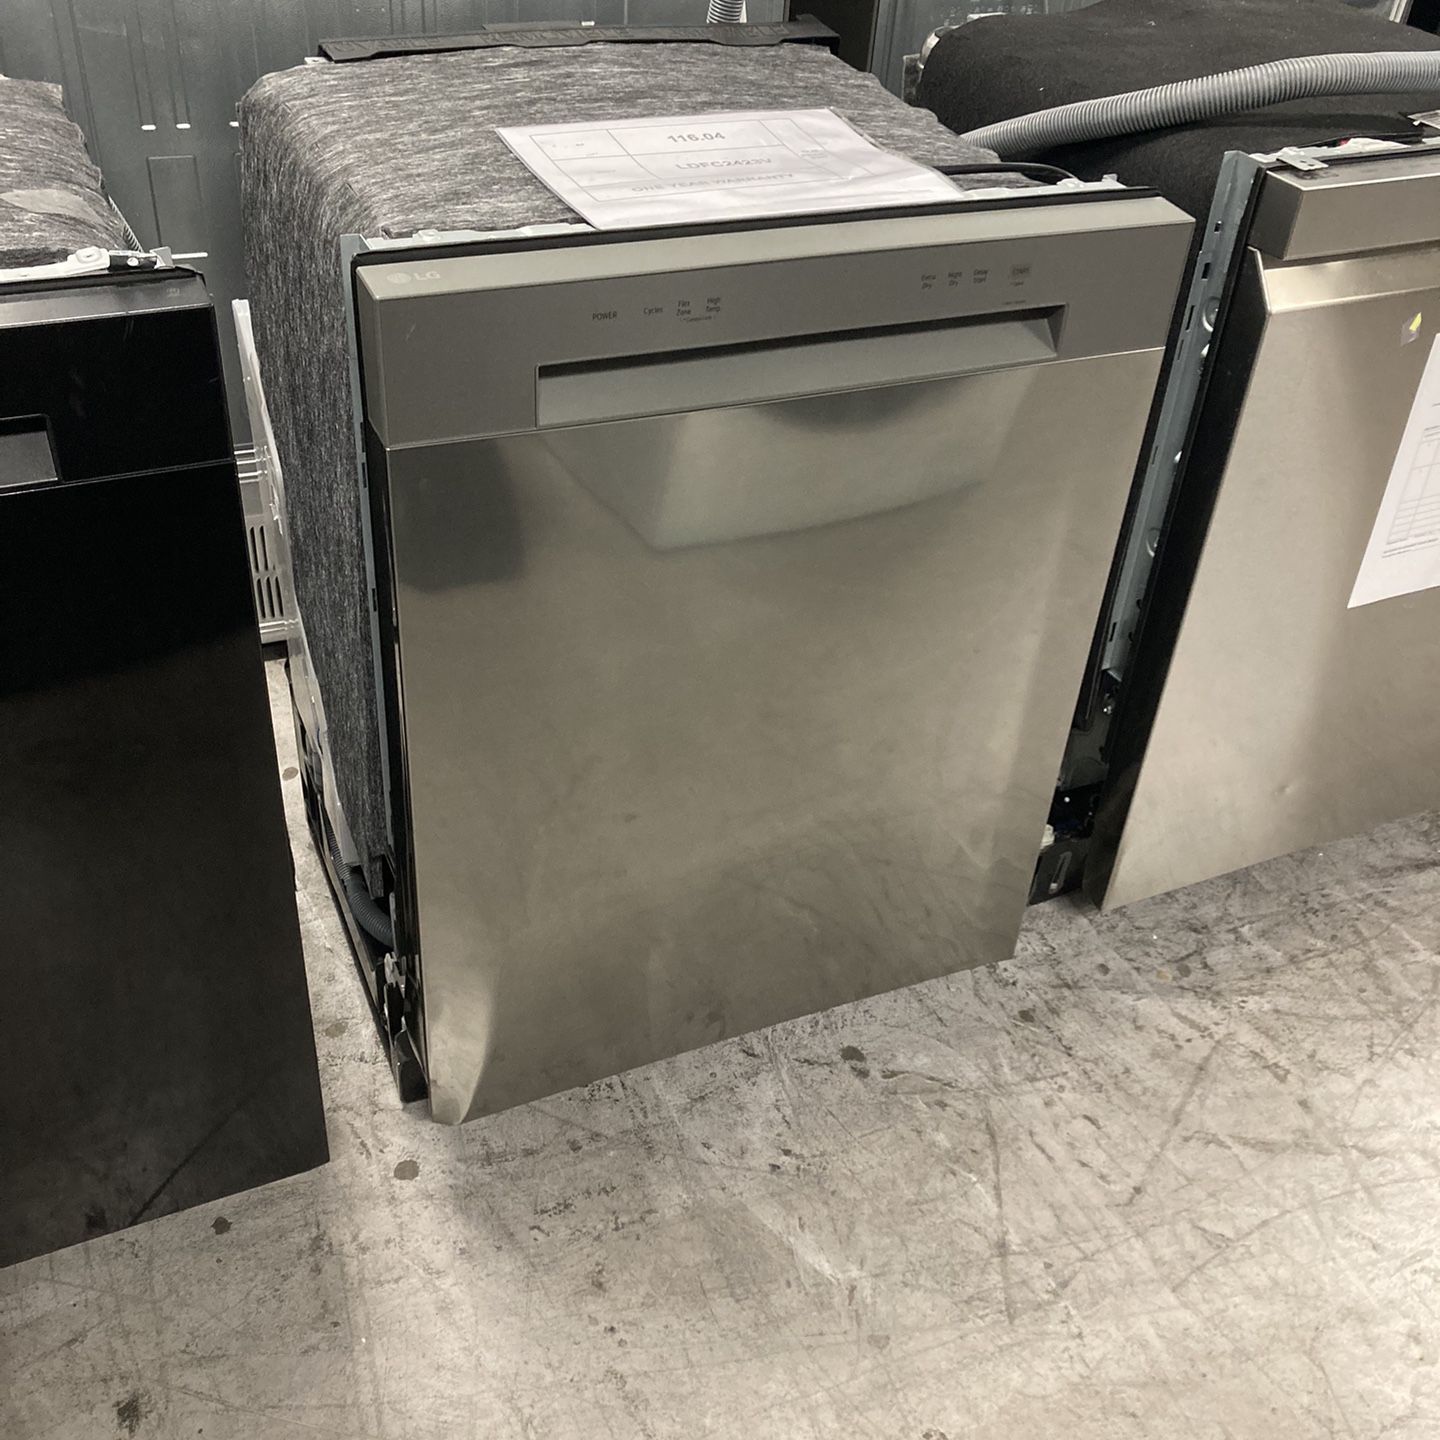 LG Front Control Dishwasher